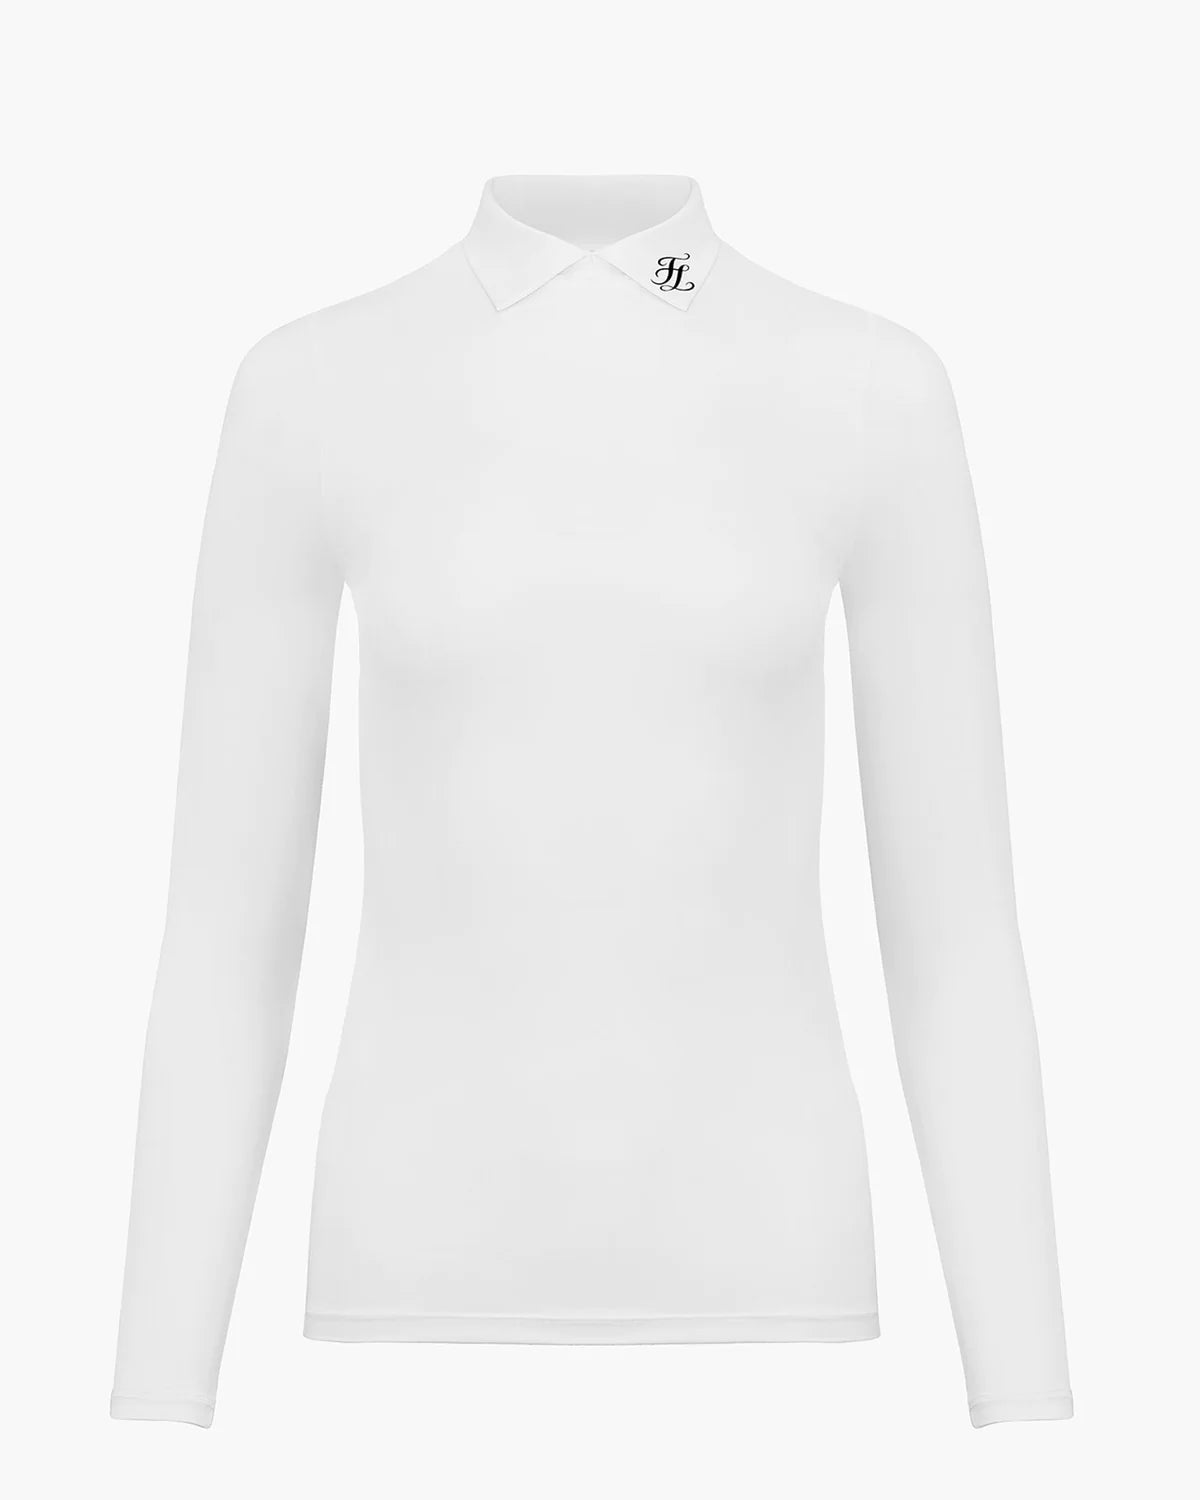 FairLiar 23SS Collar Layered T-shirt WHITE